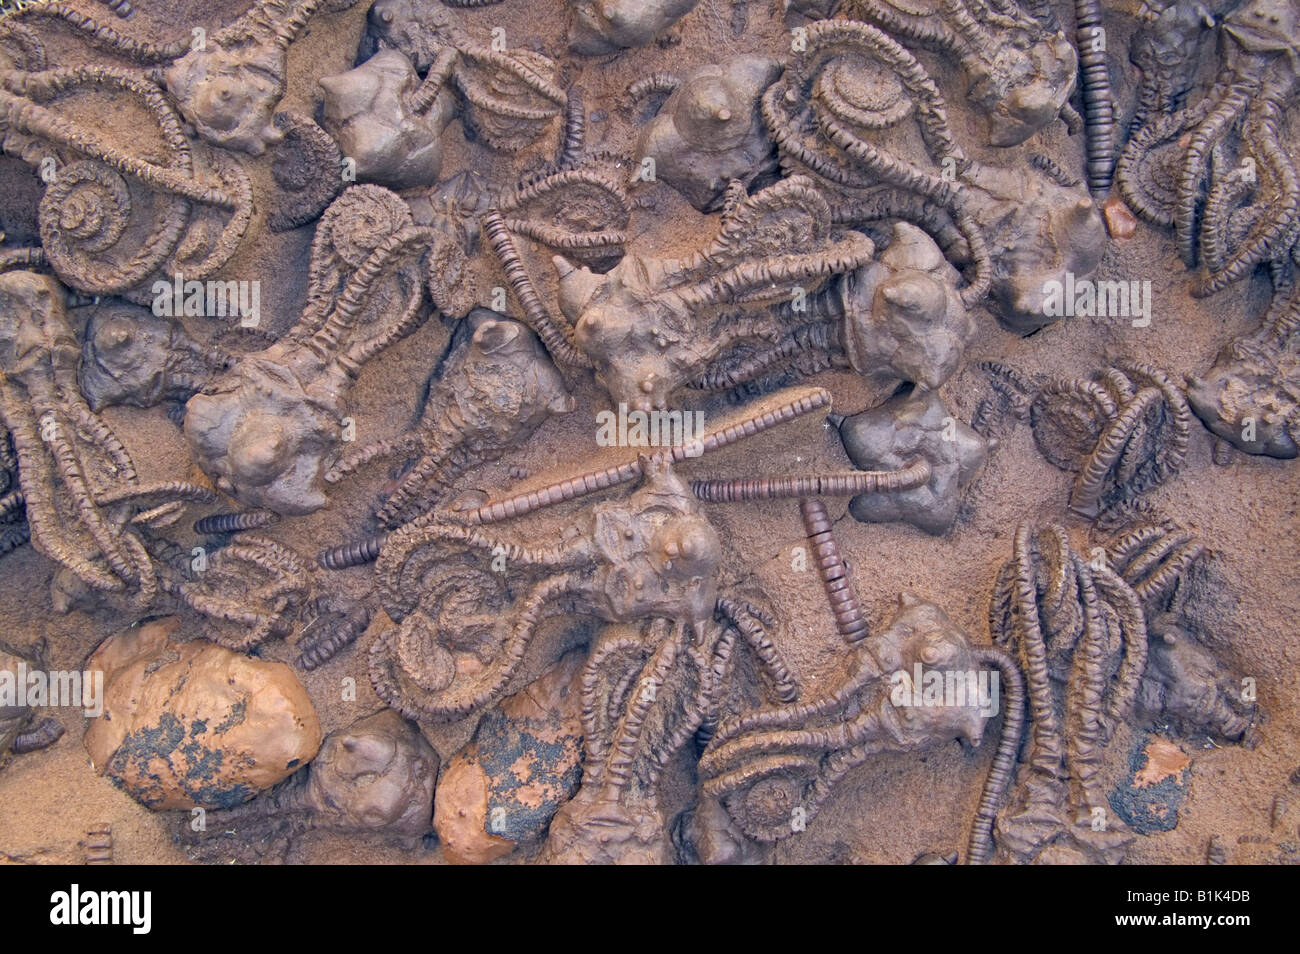 Australia fossil Fossils in